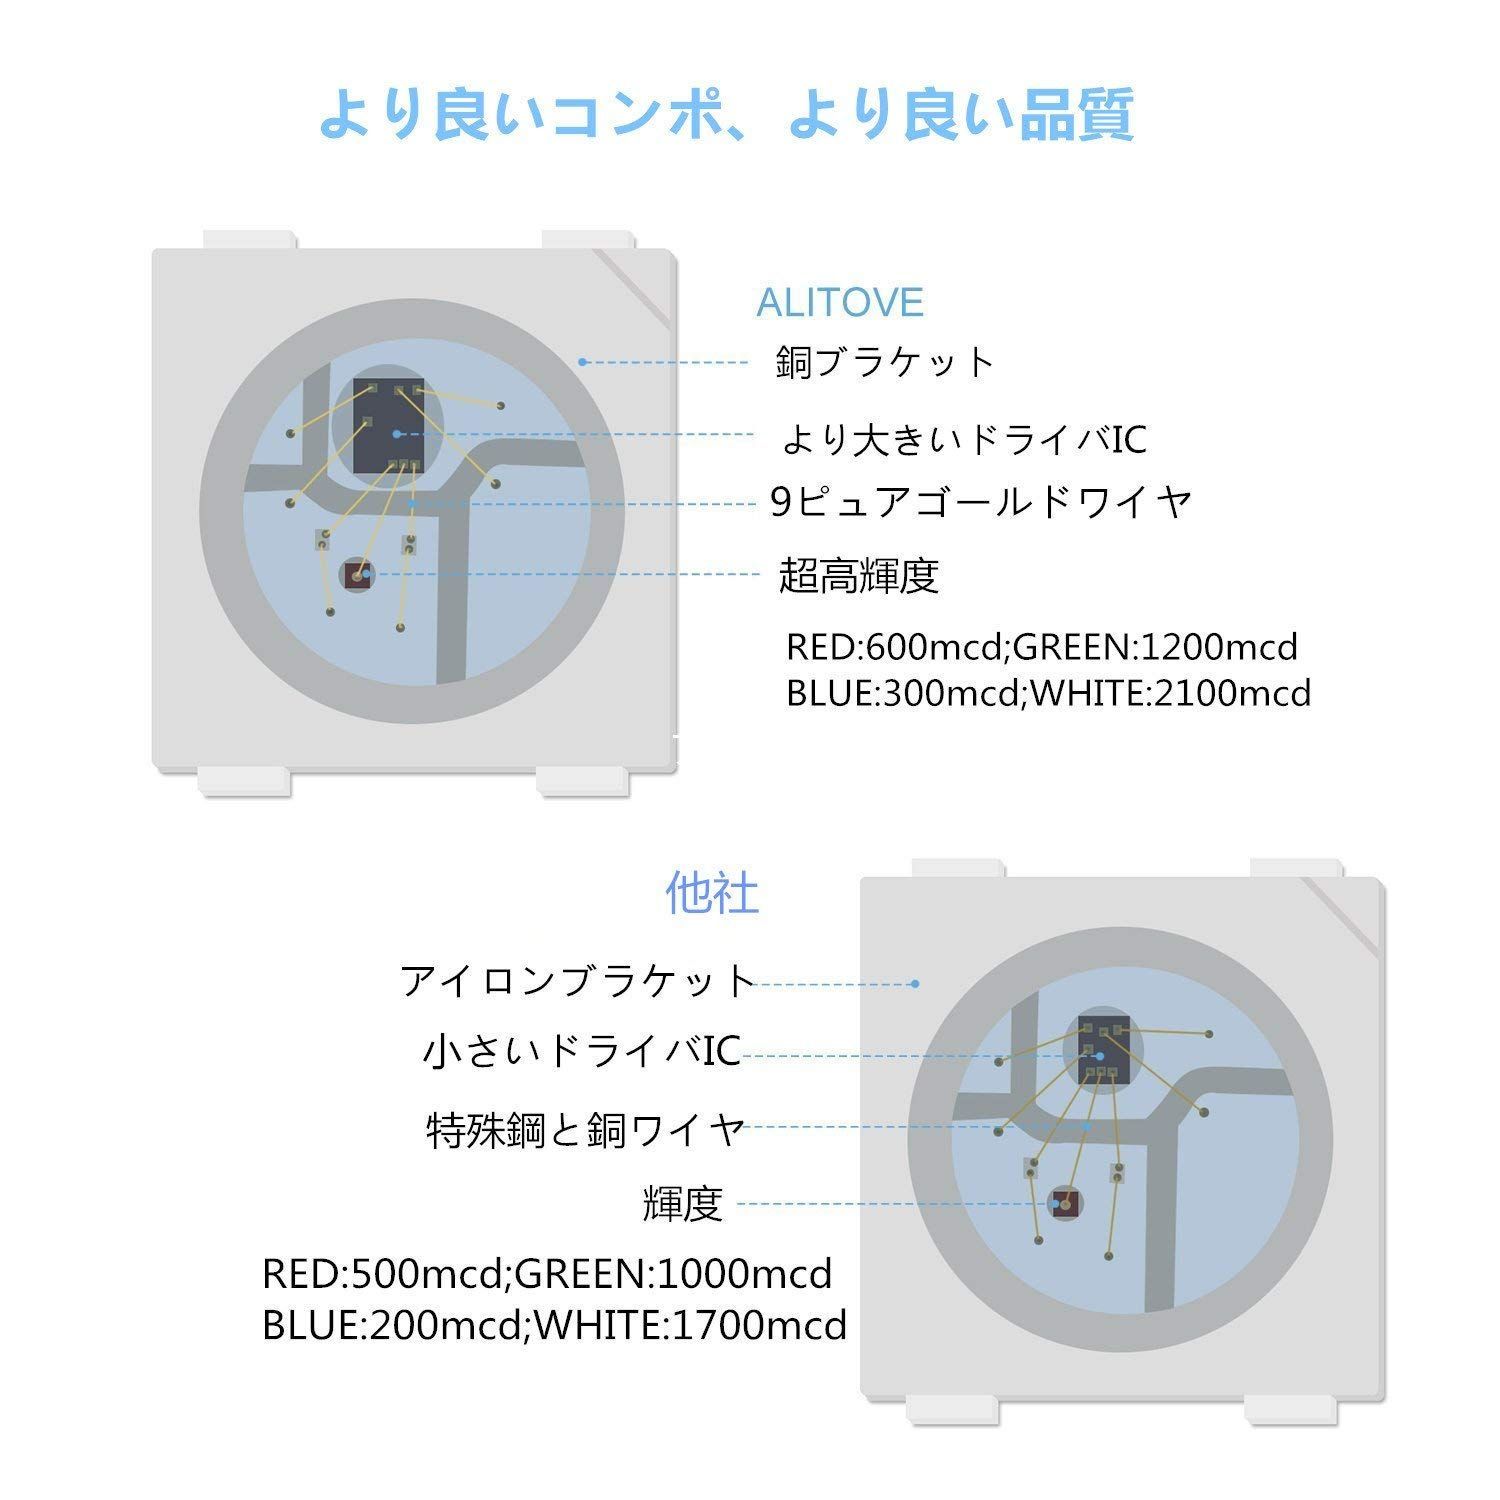 ALITOVE LEDテープライト WS2812Bアドレス可能 5050RGB - メルカリ